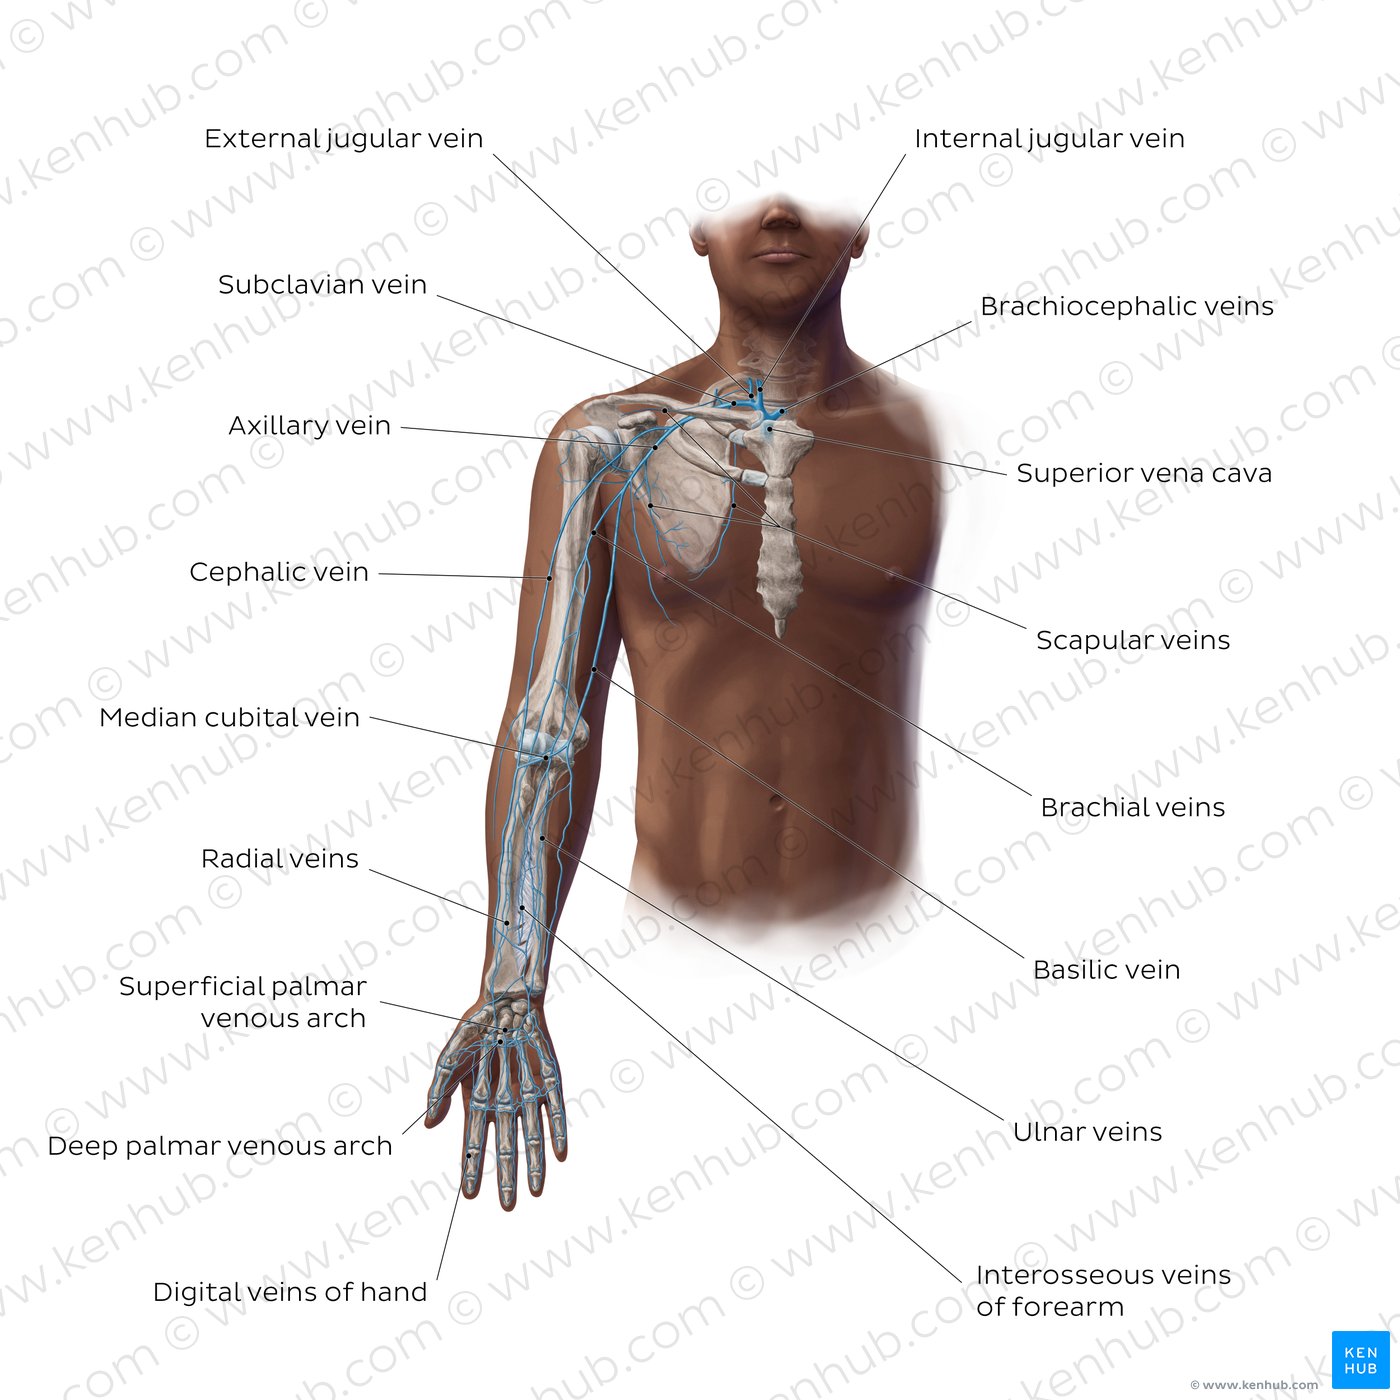 Main veins of the upper limb